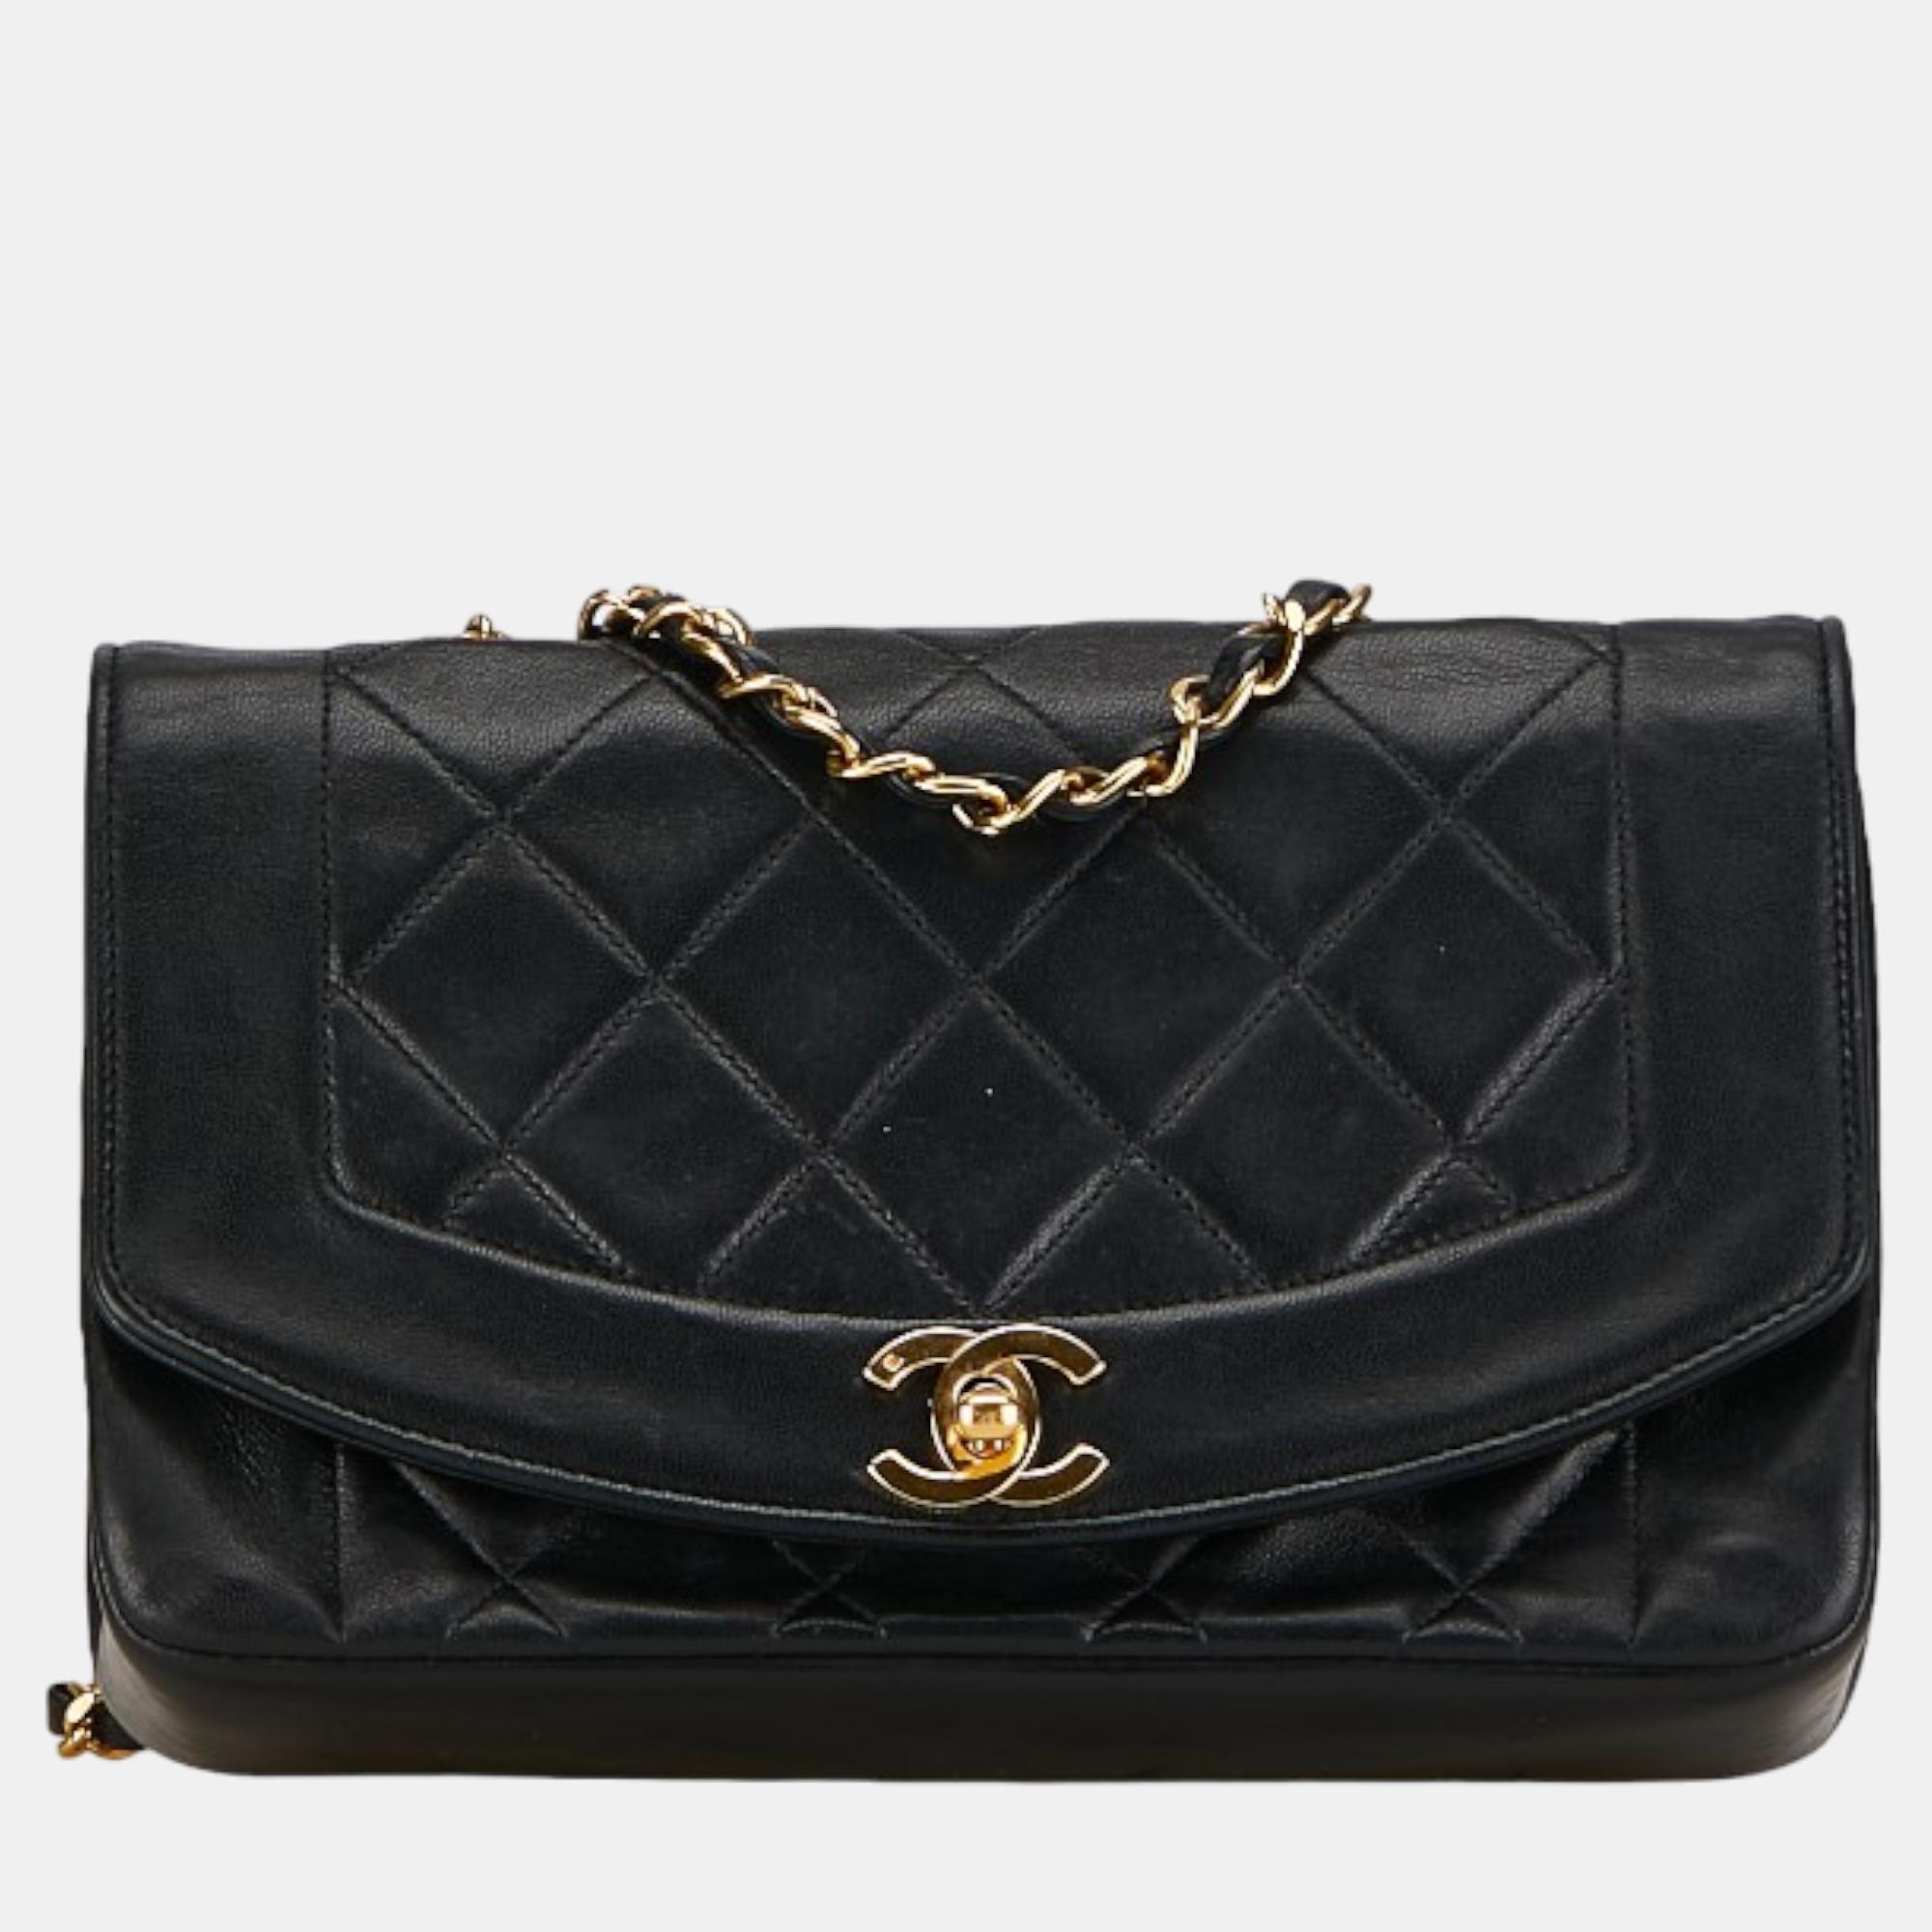 Chanel black leather diana flap crossbody bag